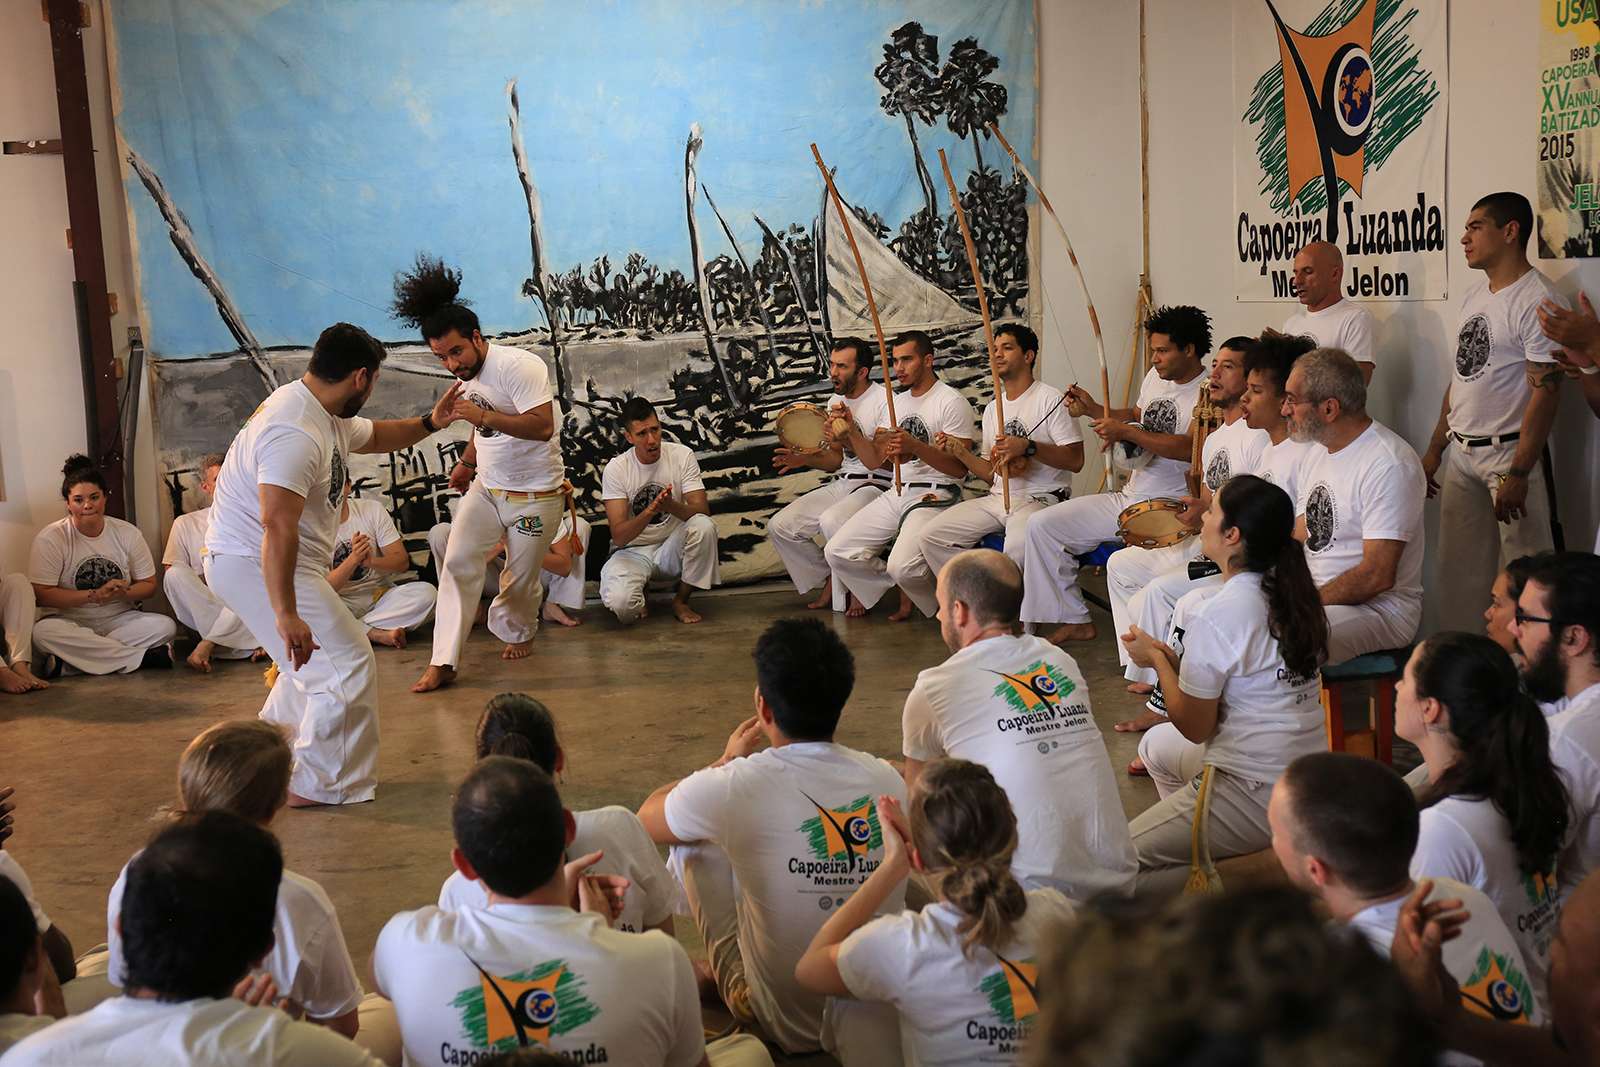 Brazilian Arts Foundation, Capoeira performance